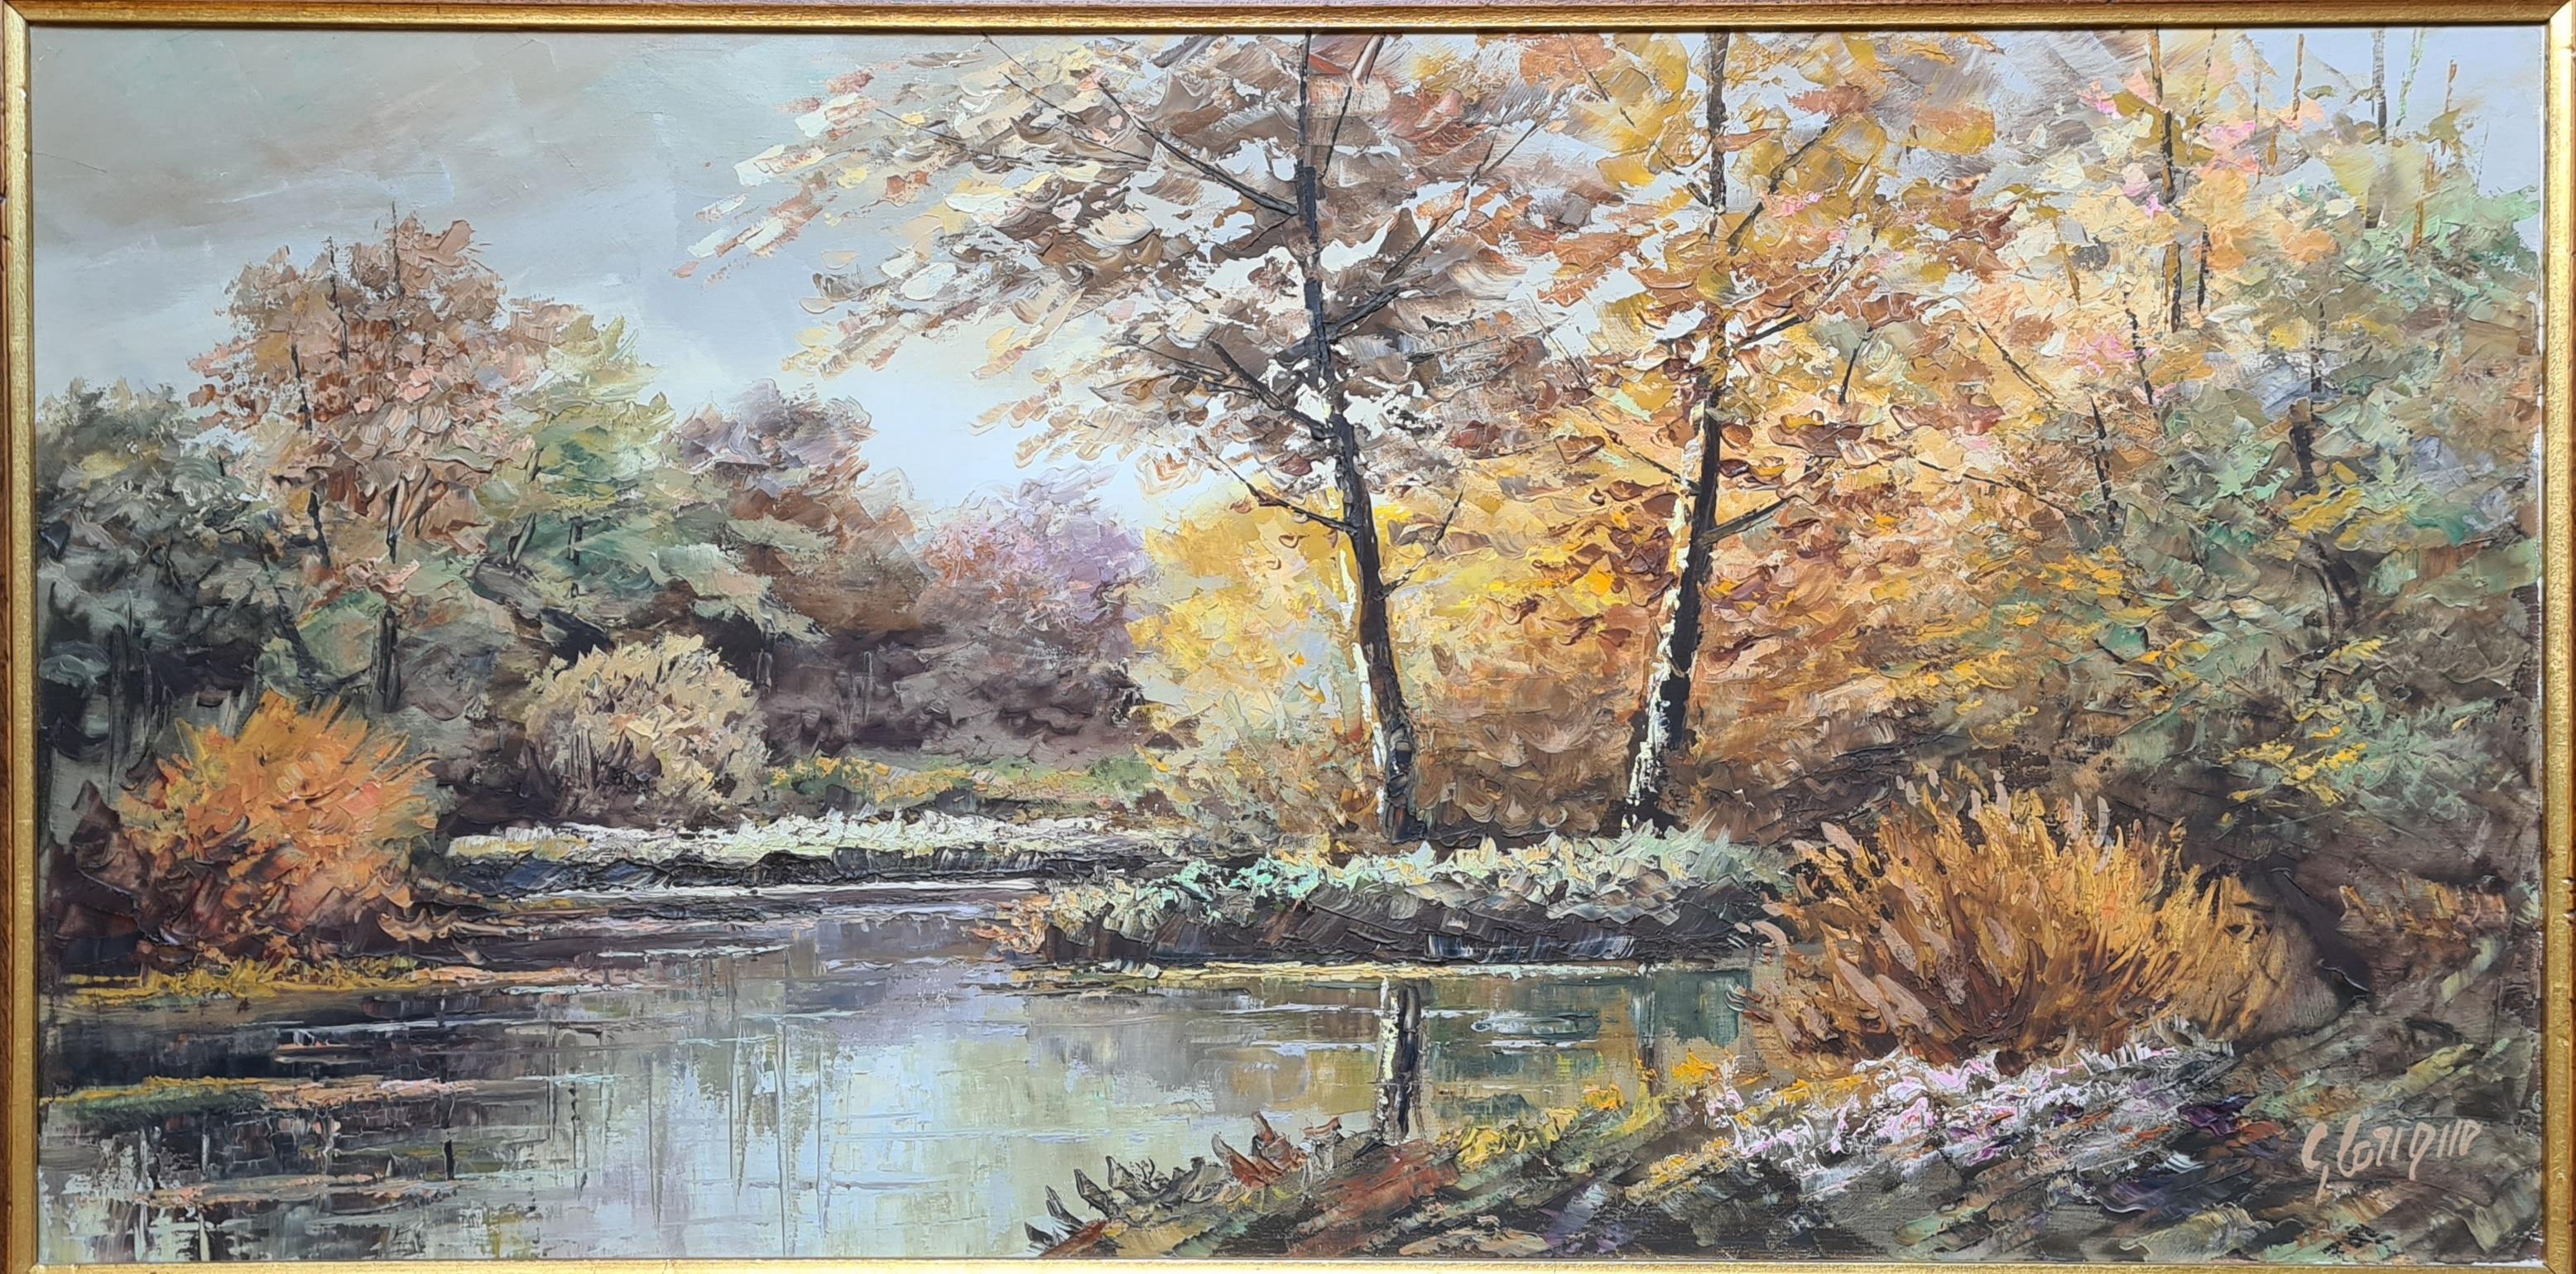 G Lorique Landscape Painting - Autumn at the Riverbank, Large Scale French Rural Landscape. Oil on Canvas.